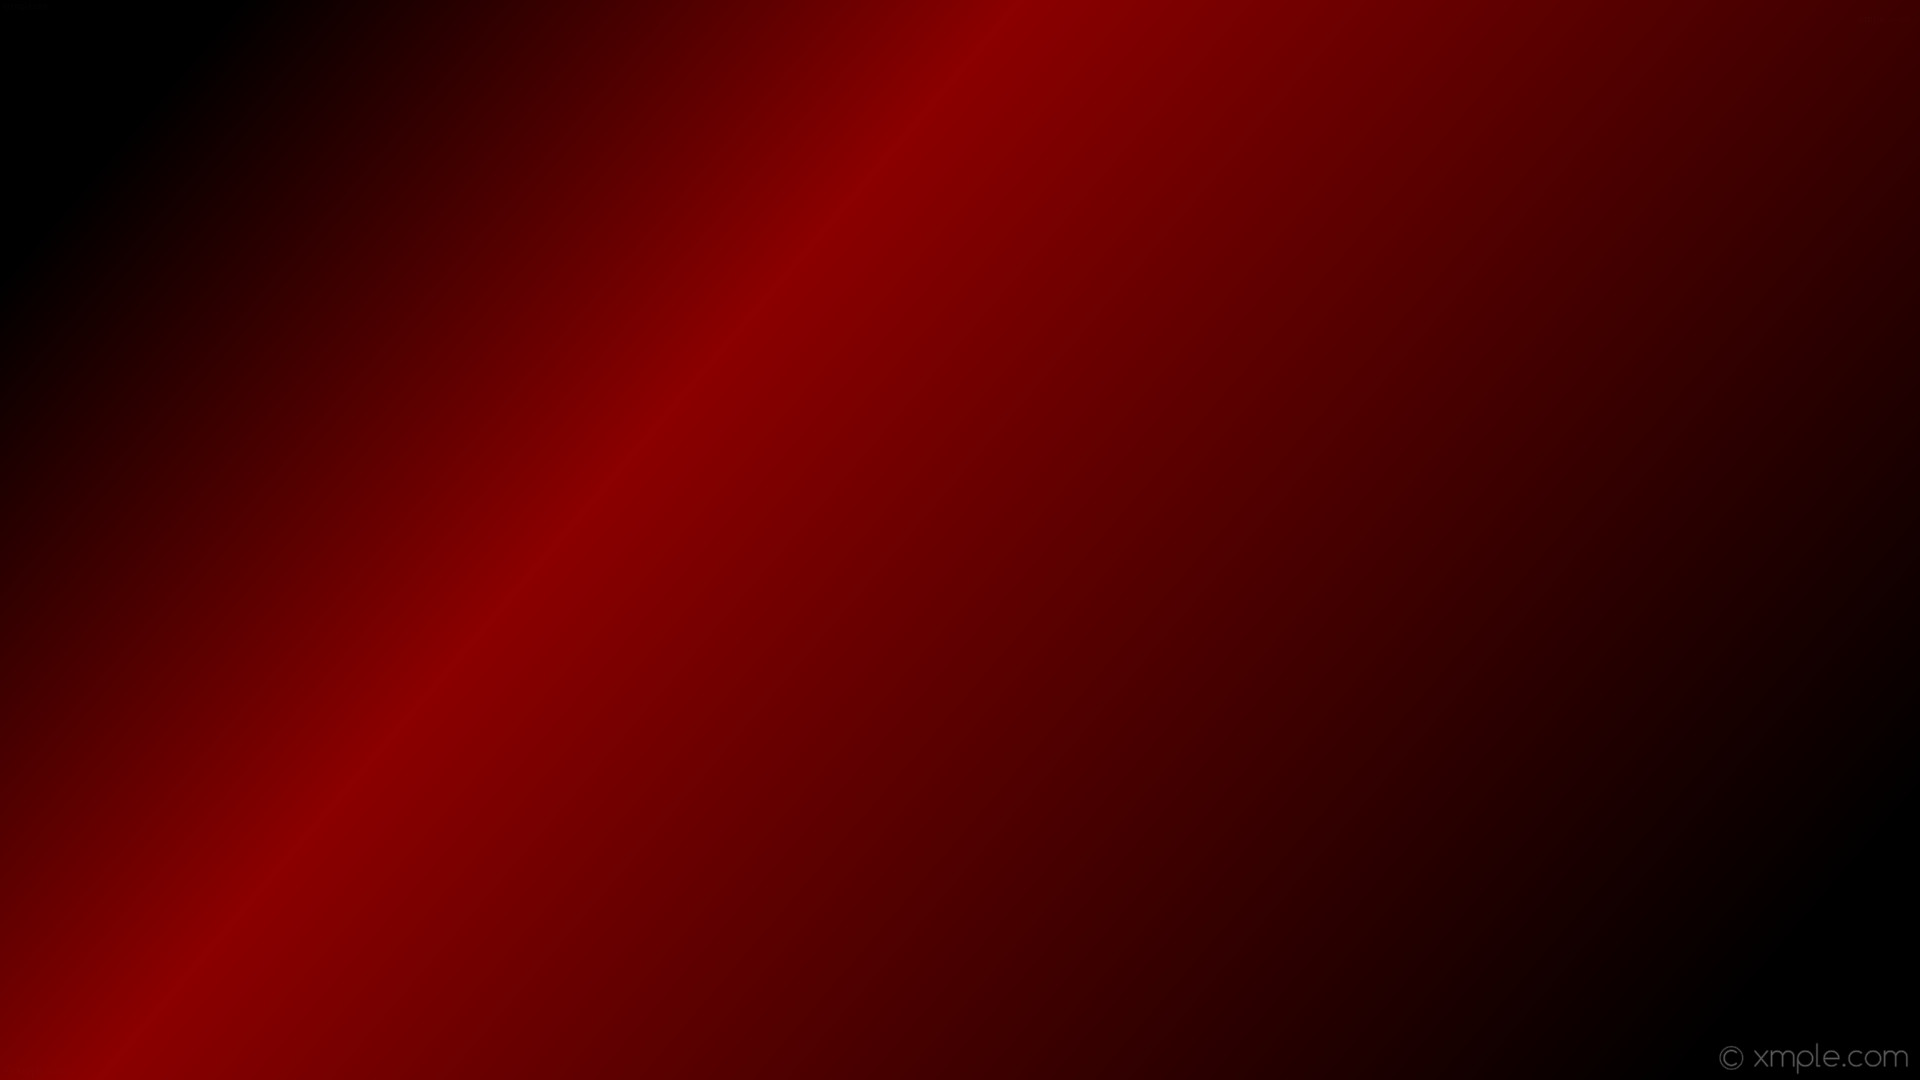 1920x1080 wallpaper highlight black red gradient linear dark red #000000 #8b0000 345Â°  67%